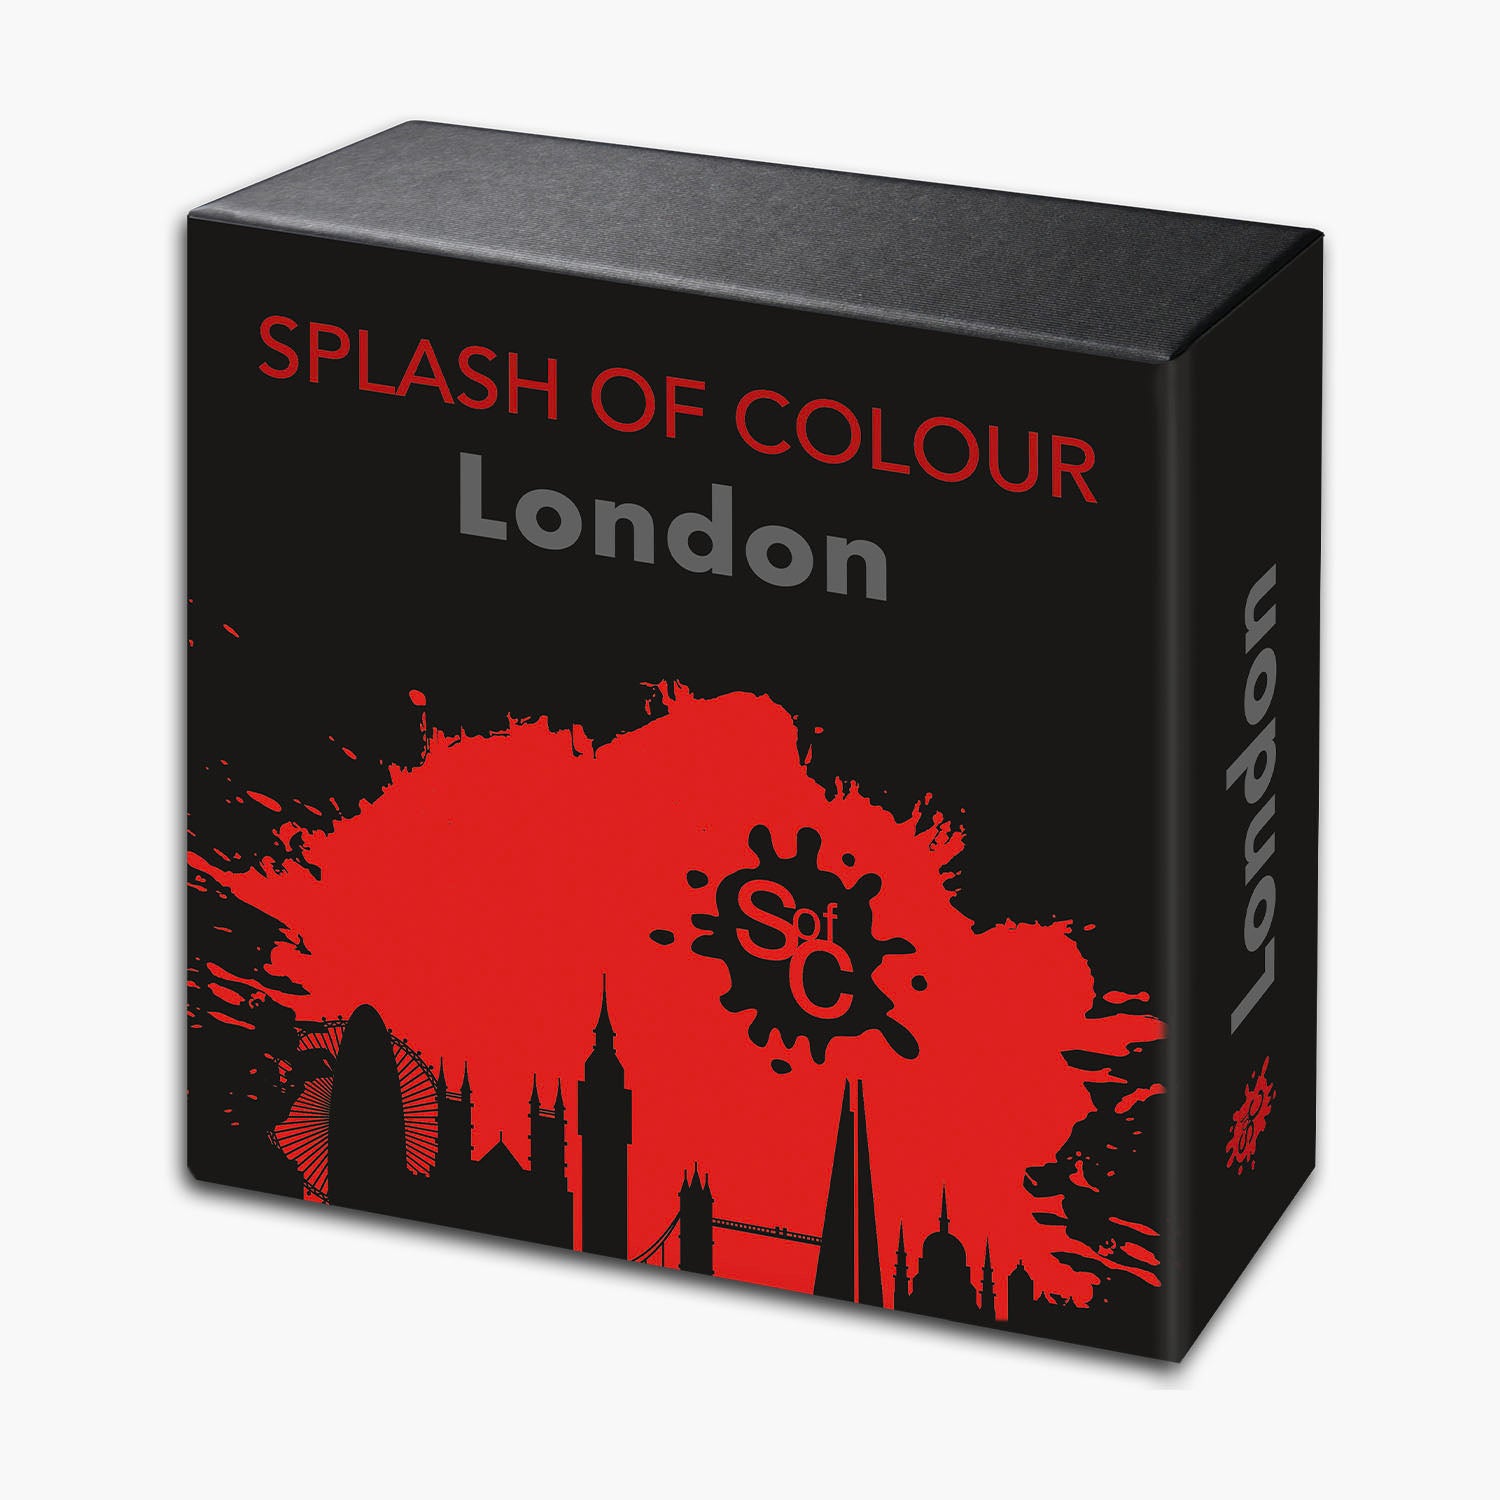 Splash of Colour City London 2oz Silver Coin